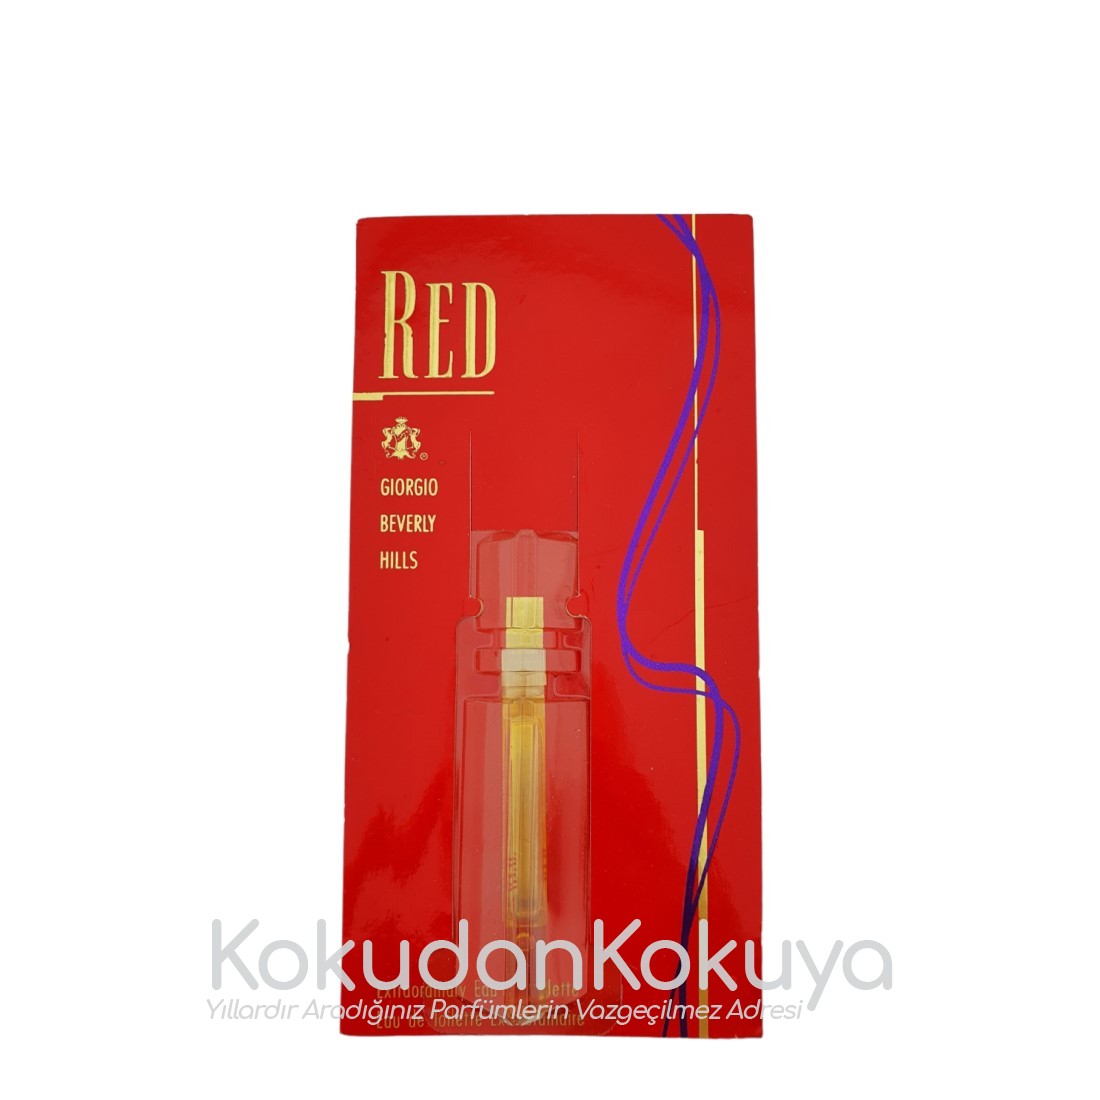 GIORGIO BEVERLY HILLS Red (Vintage) Parfüm Kadın 2ml Minyatür (Mini Perfume) Dökme 